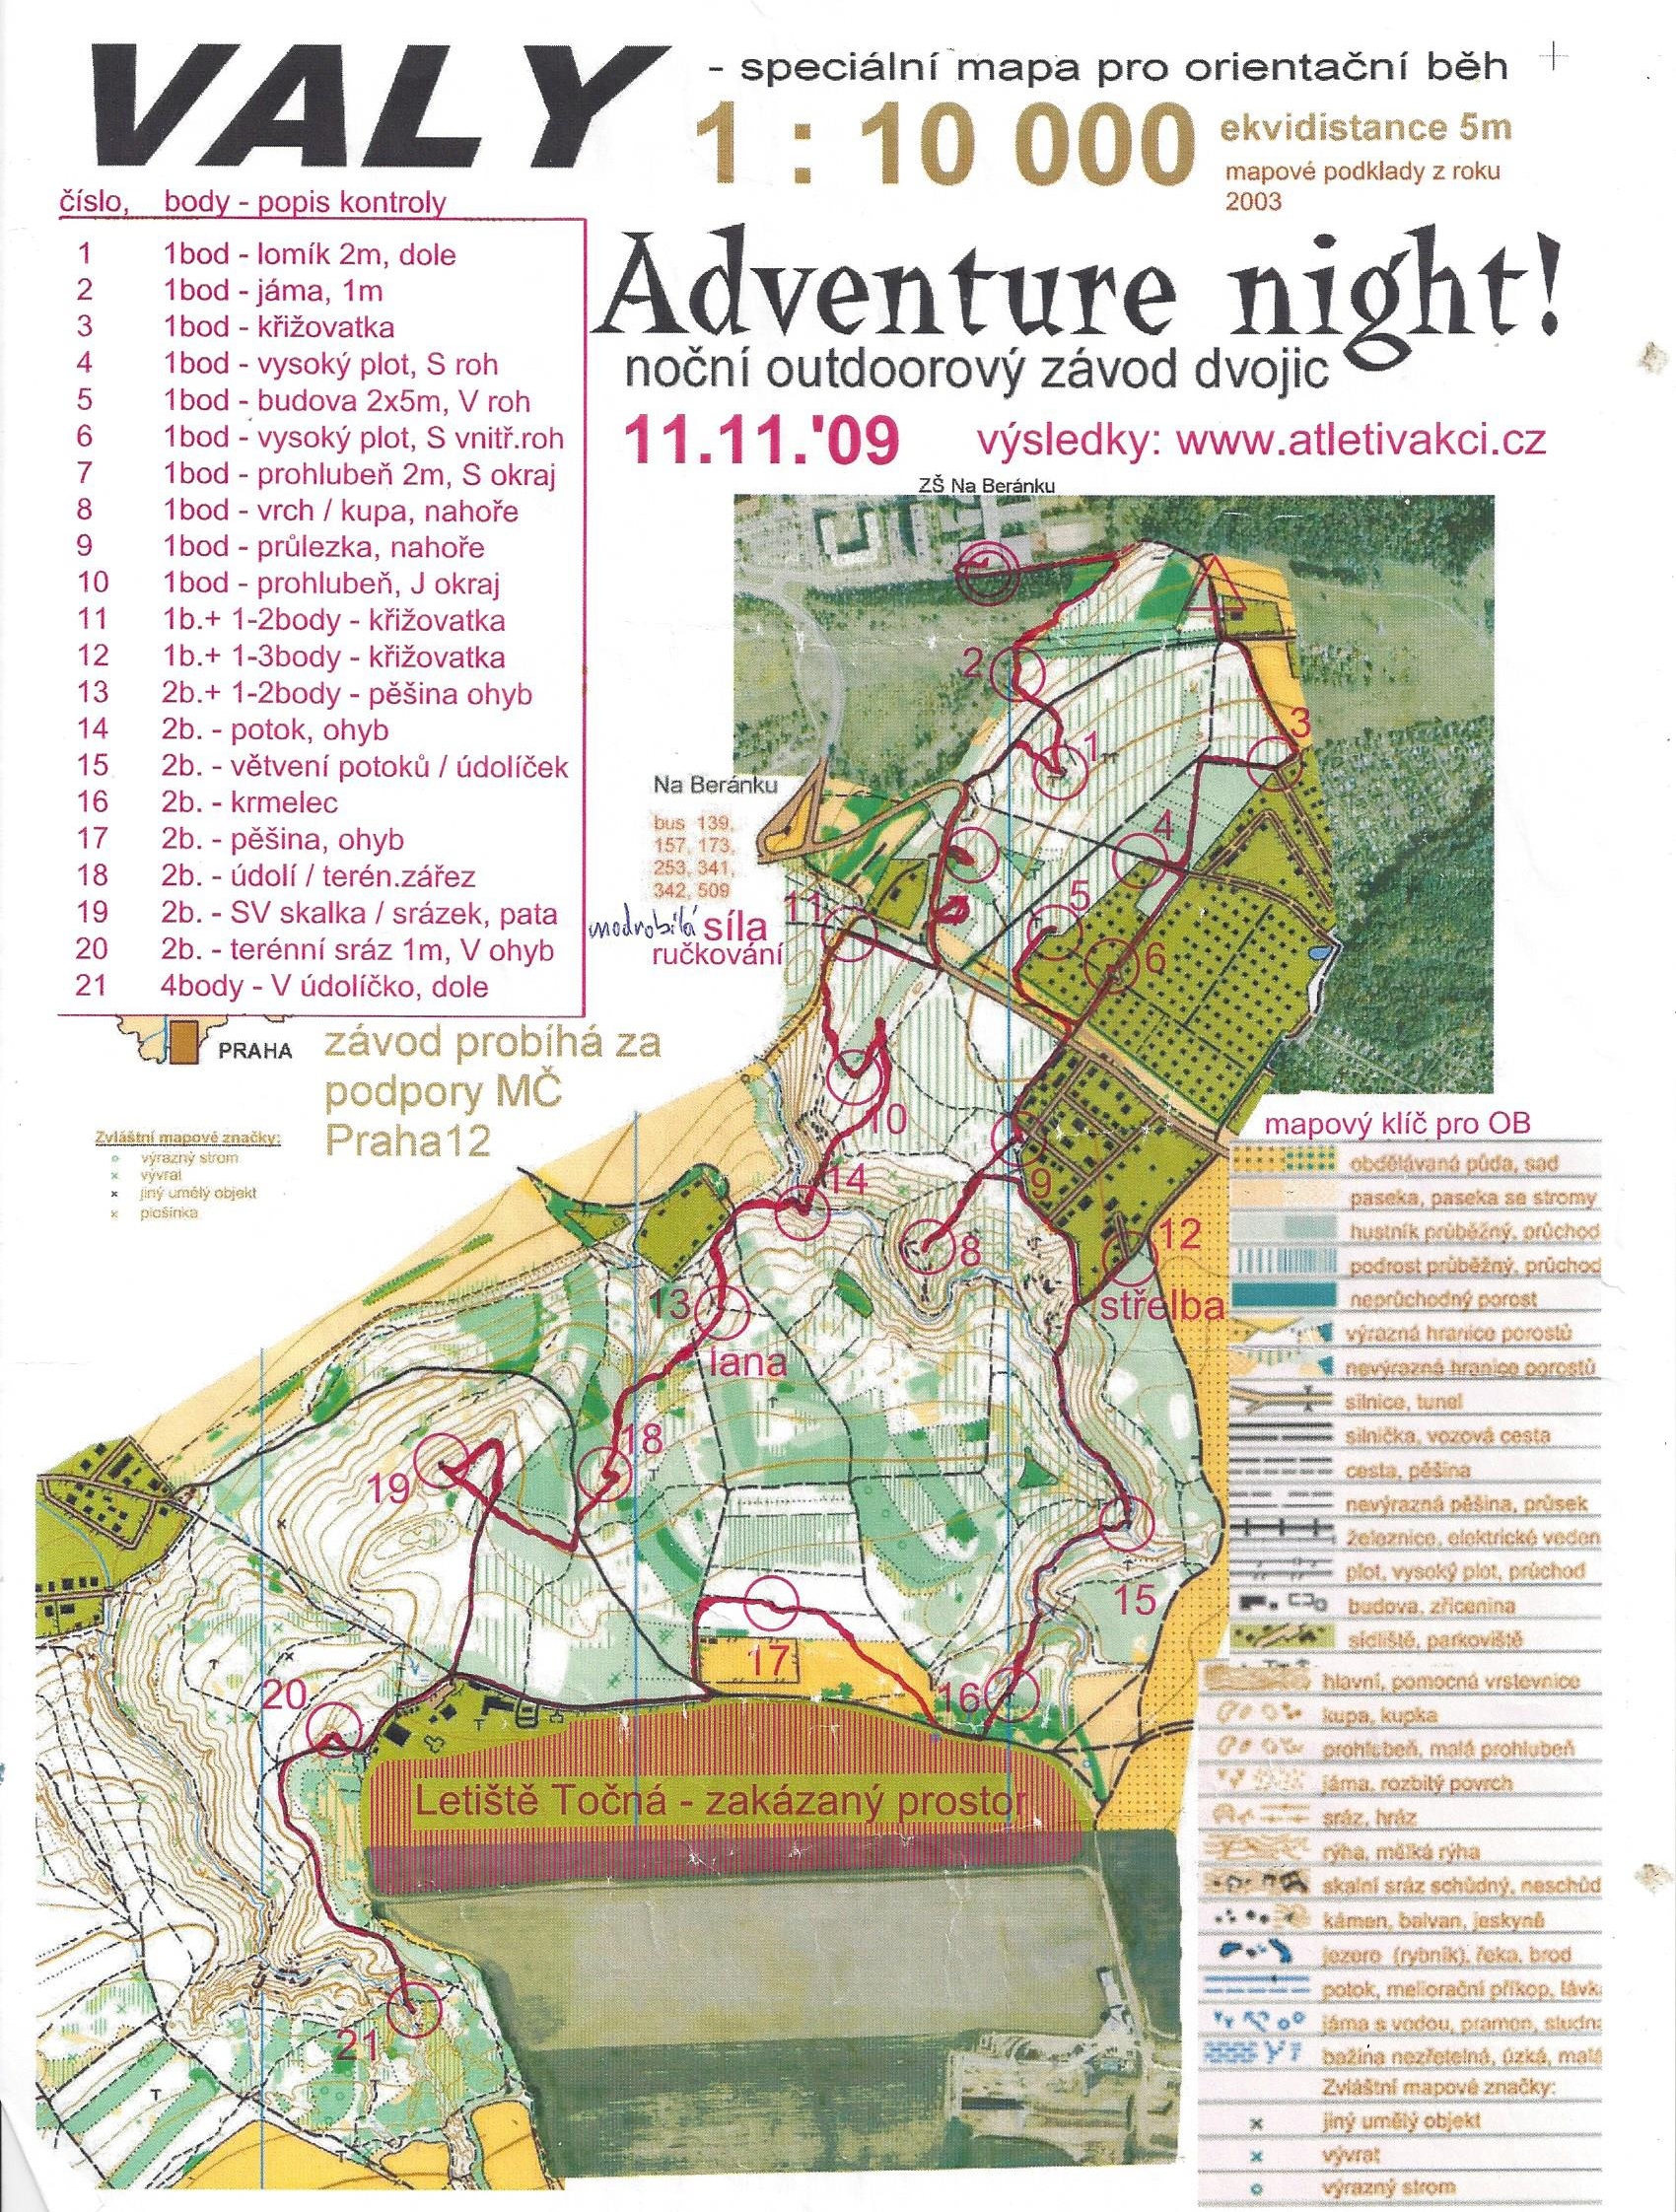 Atleti v akci - Adventure night (2009-11-11)